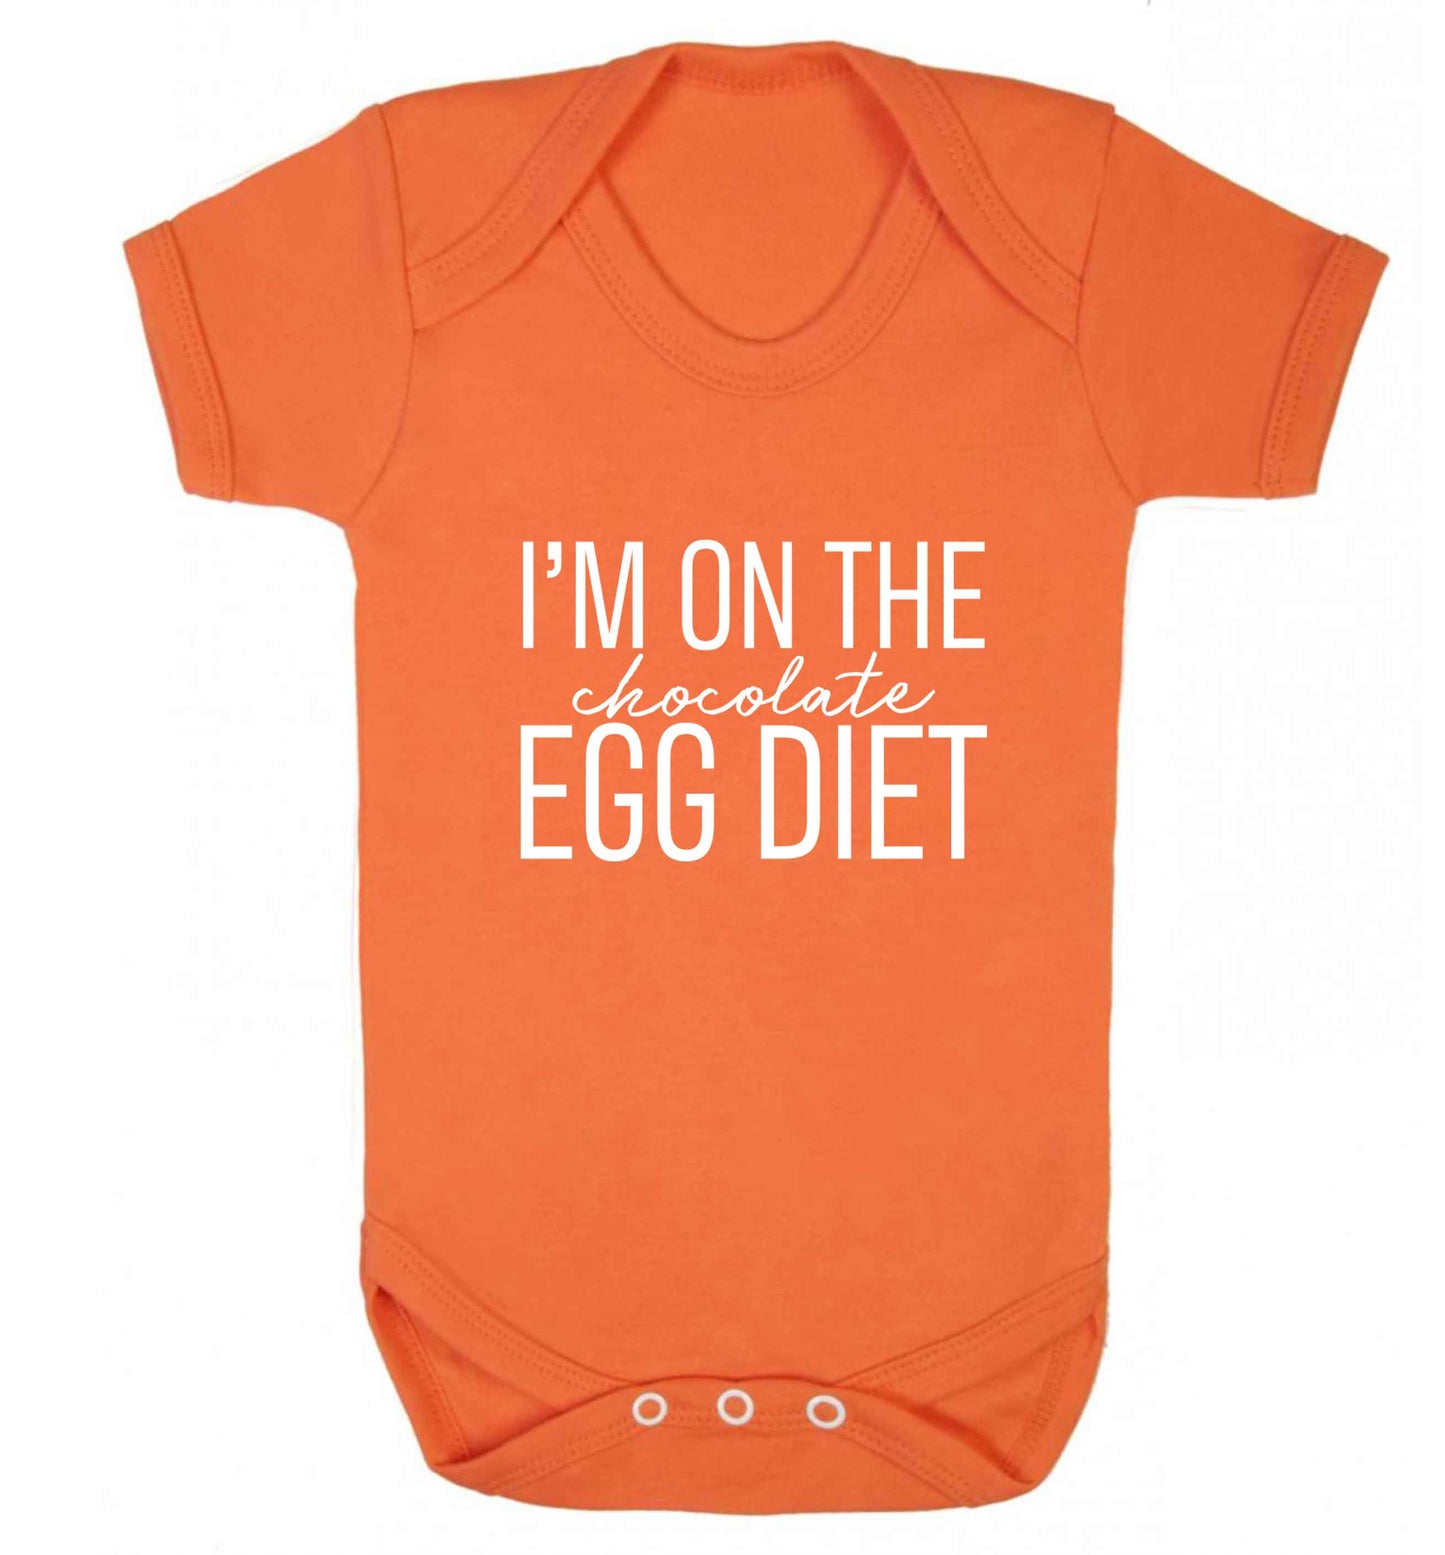 I'm on the chocolate egg diet baby vest orange 18-24 months